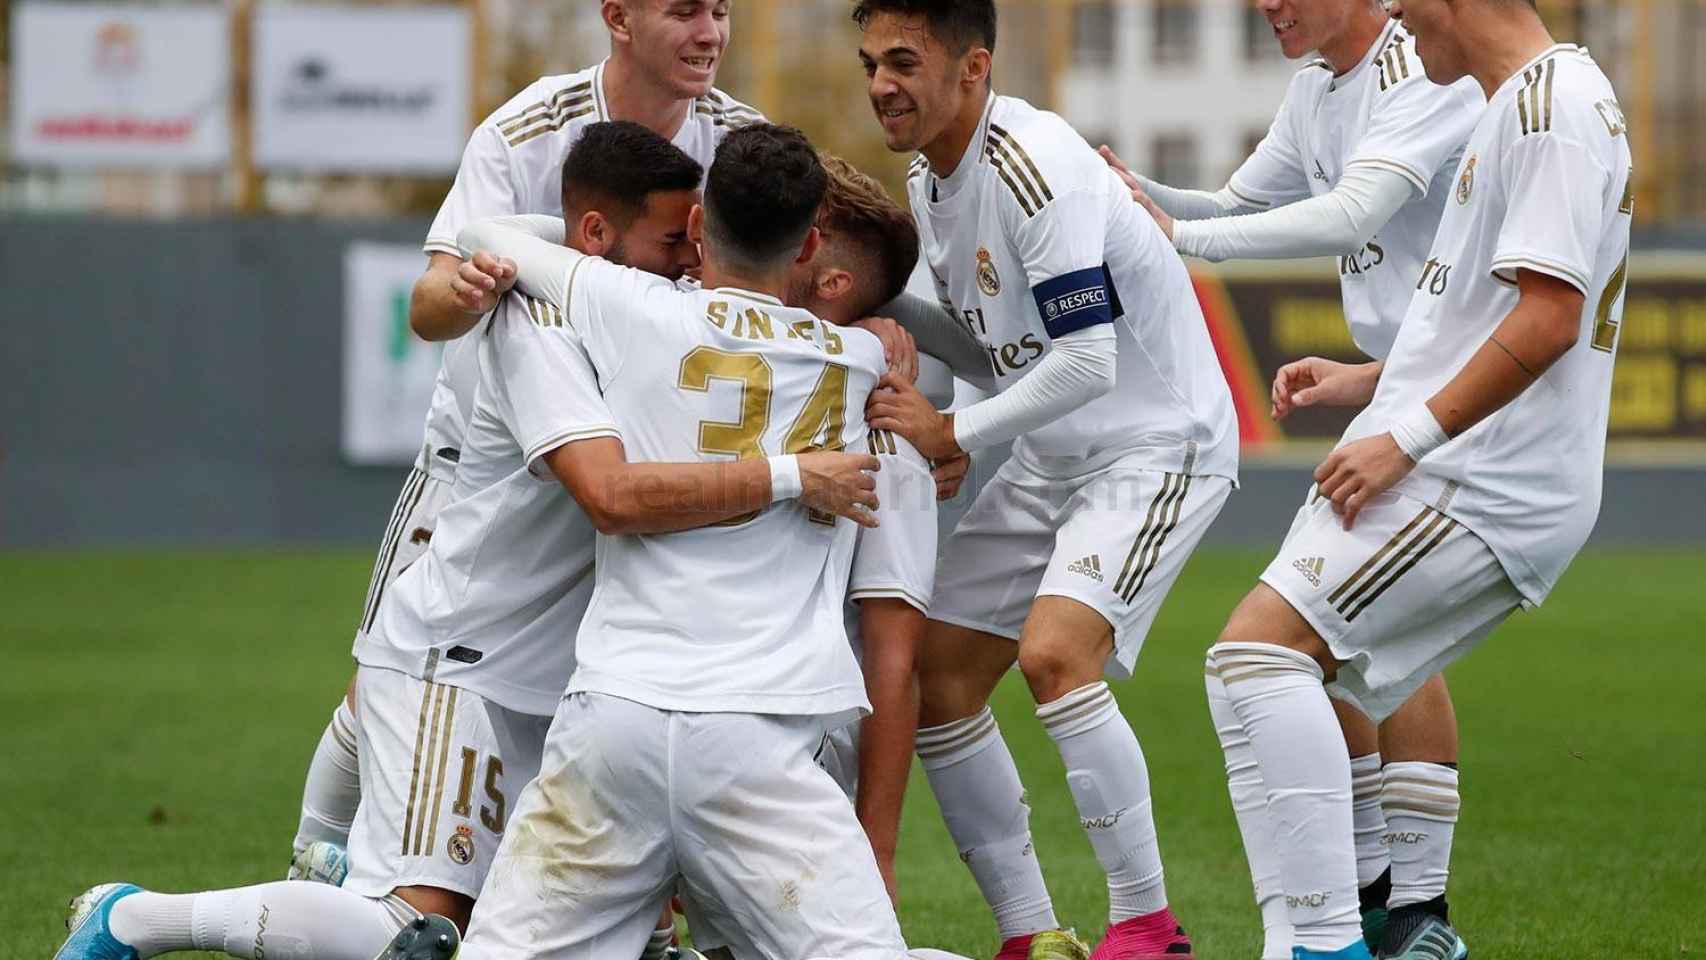 Piña del Juvenil A del Real Madrid en la UEFA Youth League 2019/2020